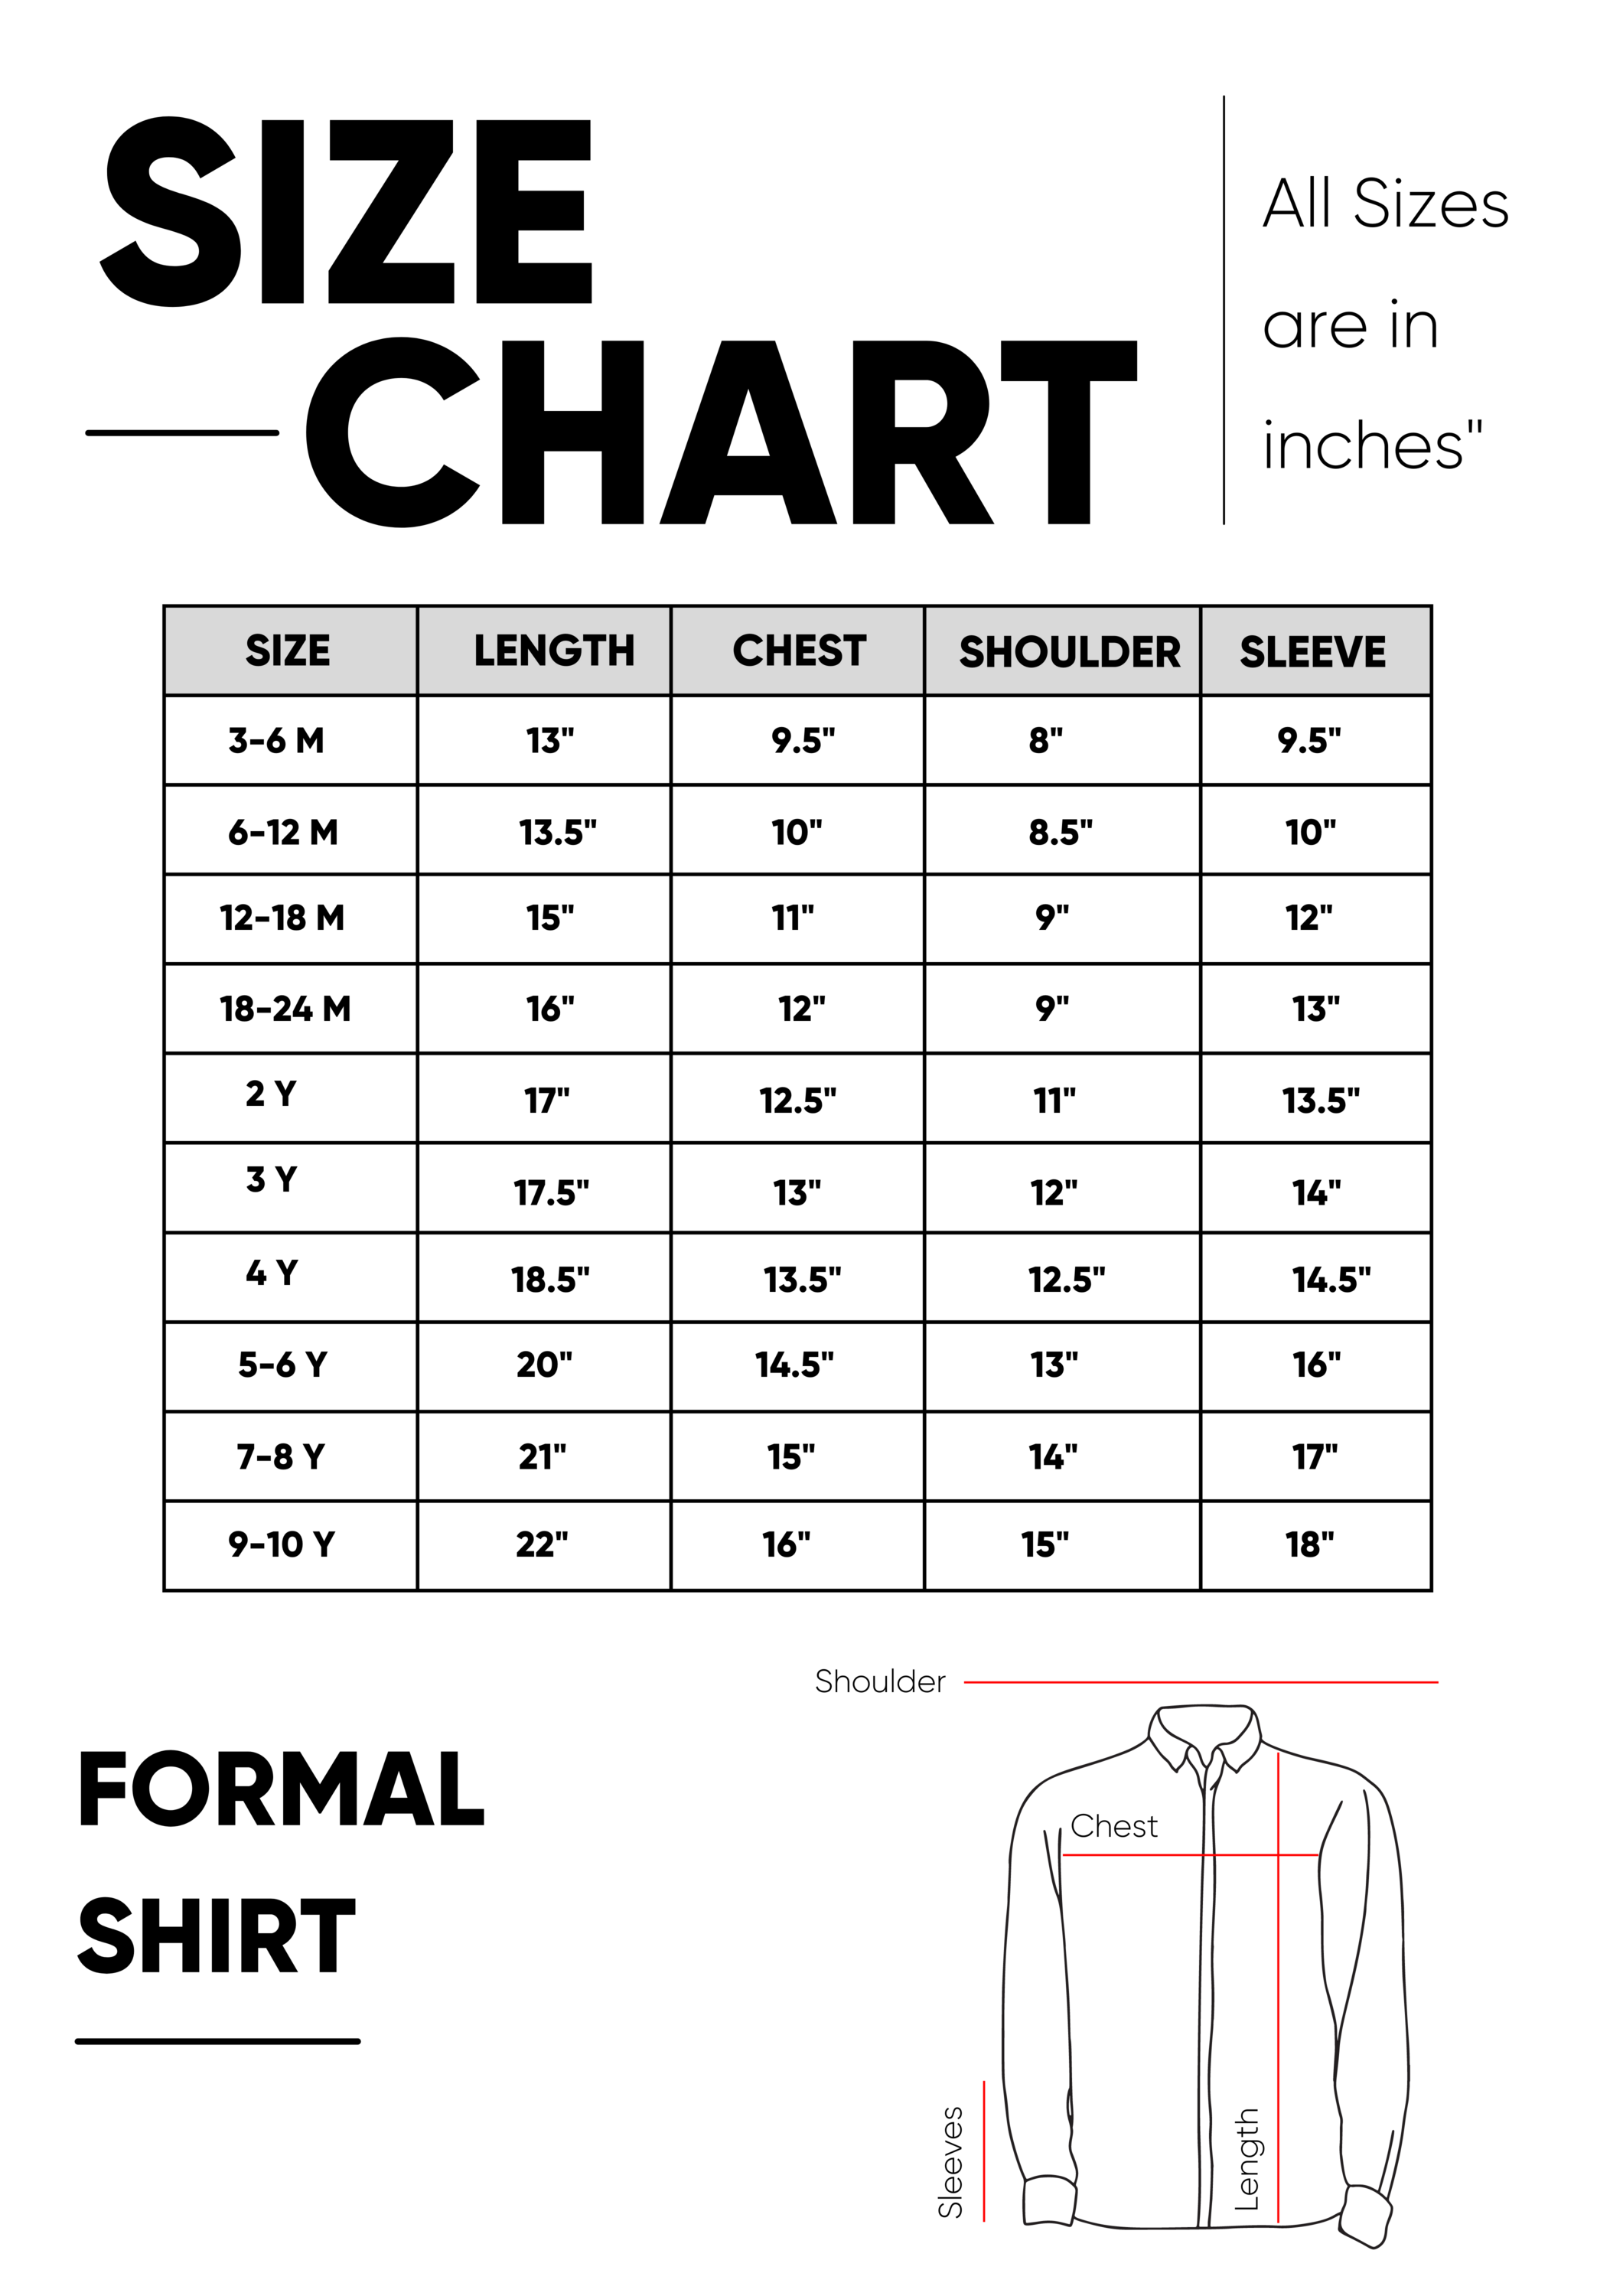 BLACK FORMAL SHIRT SIZE CHART